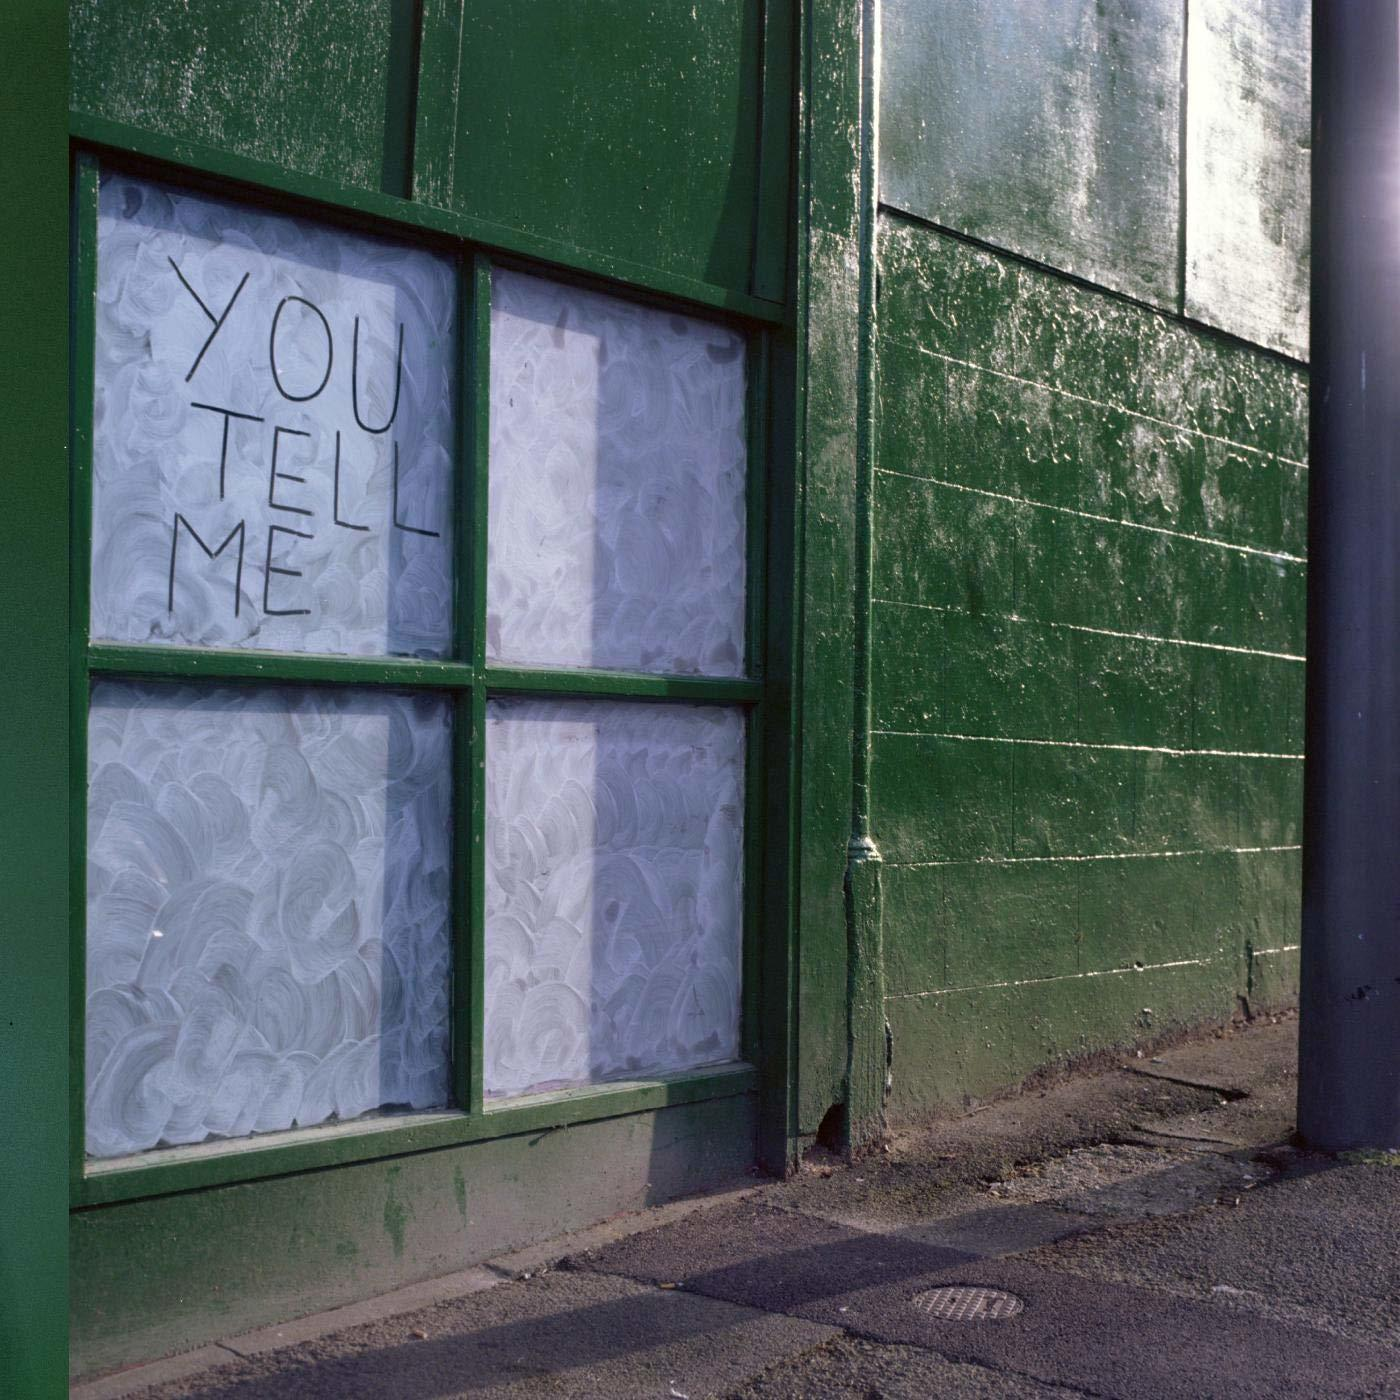 You Tell Me - - Me (Vinyl) You Tell